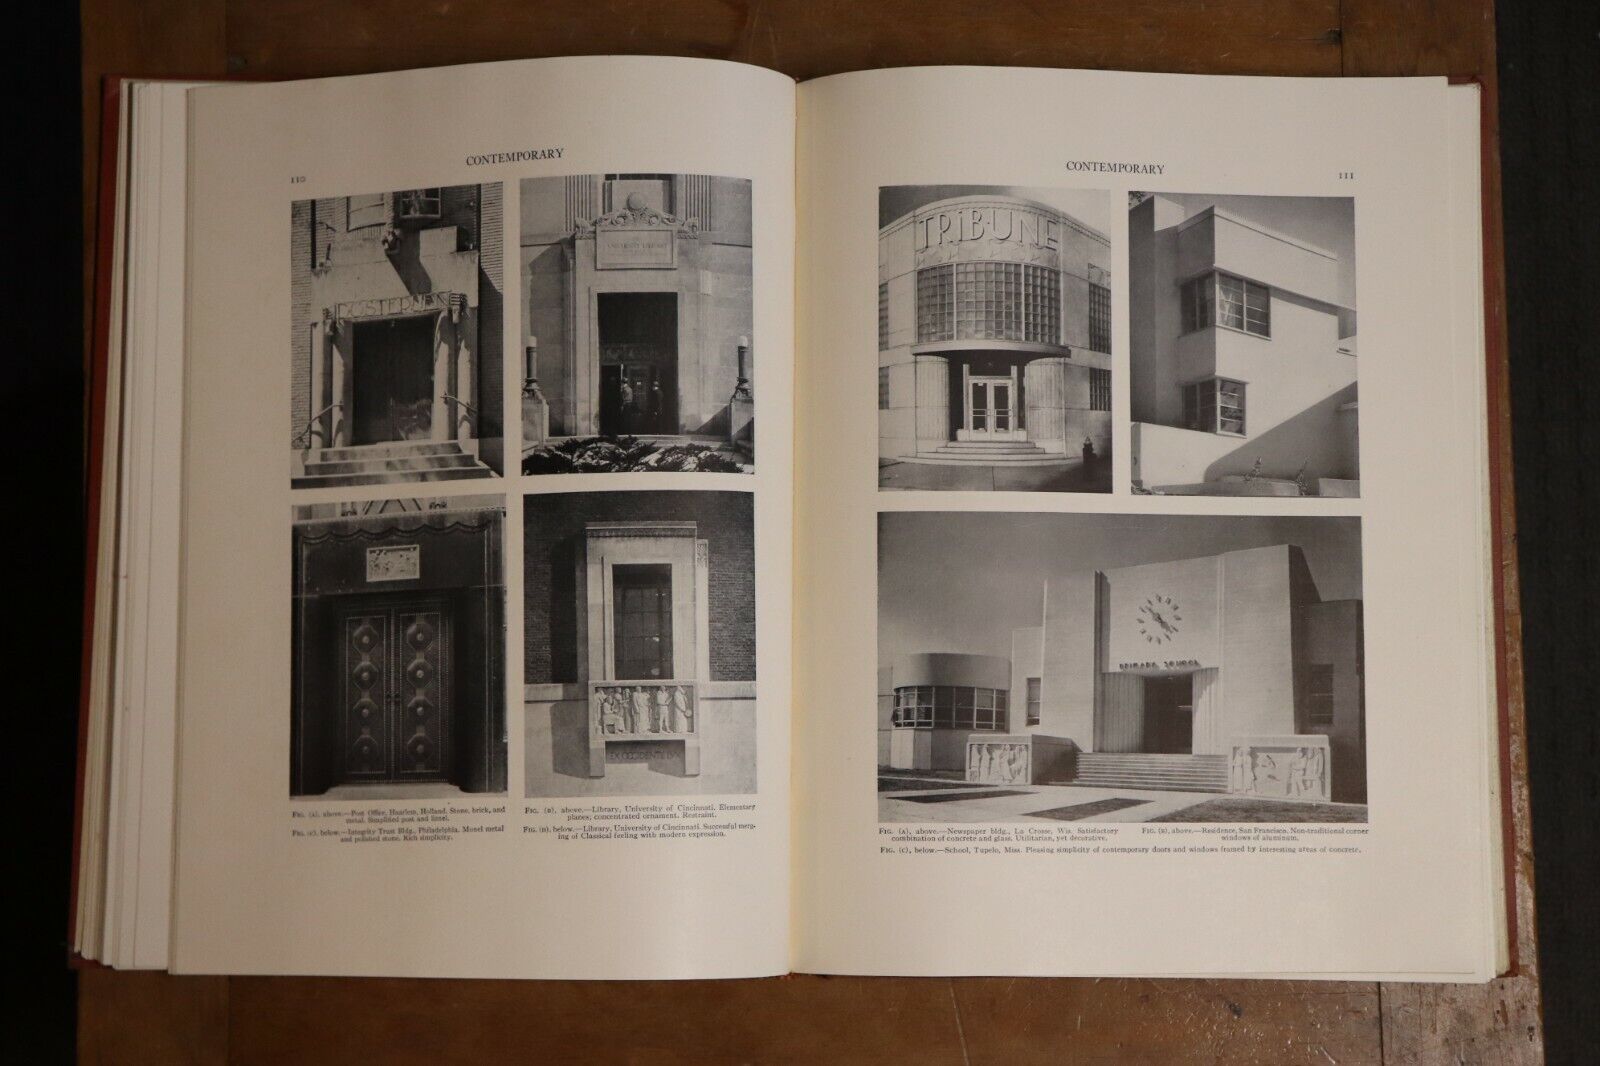 Architectural Design by Ernest Pickering - 1941 - Antique Architecture Book